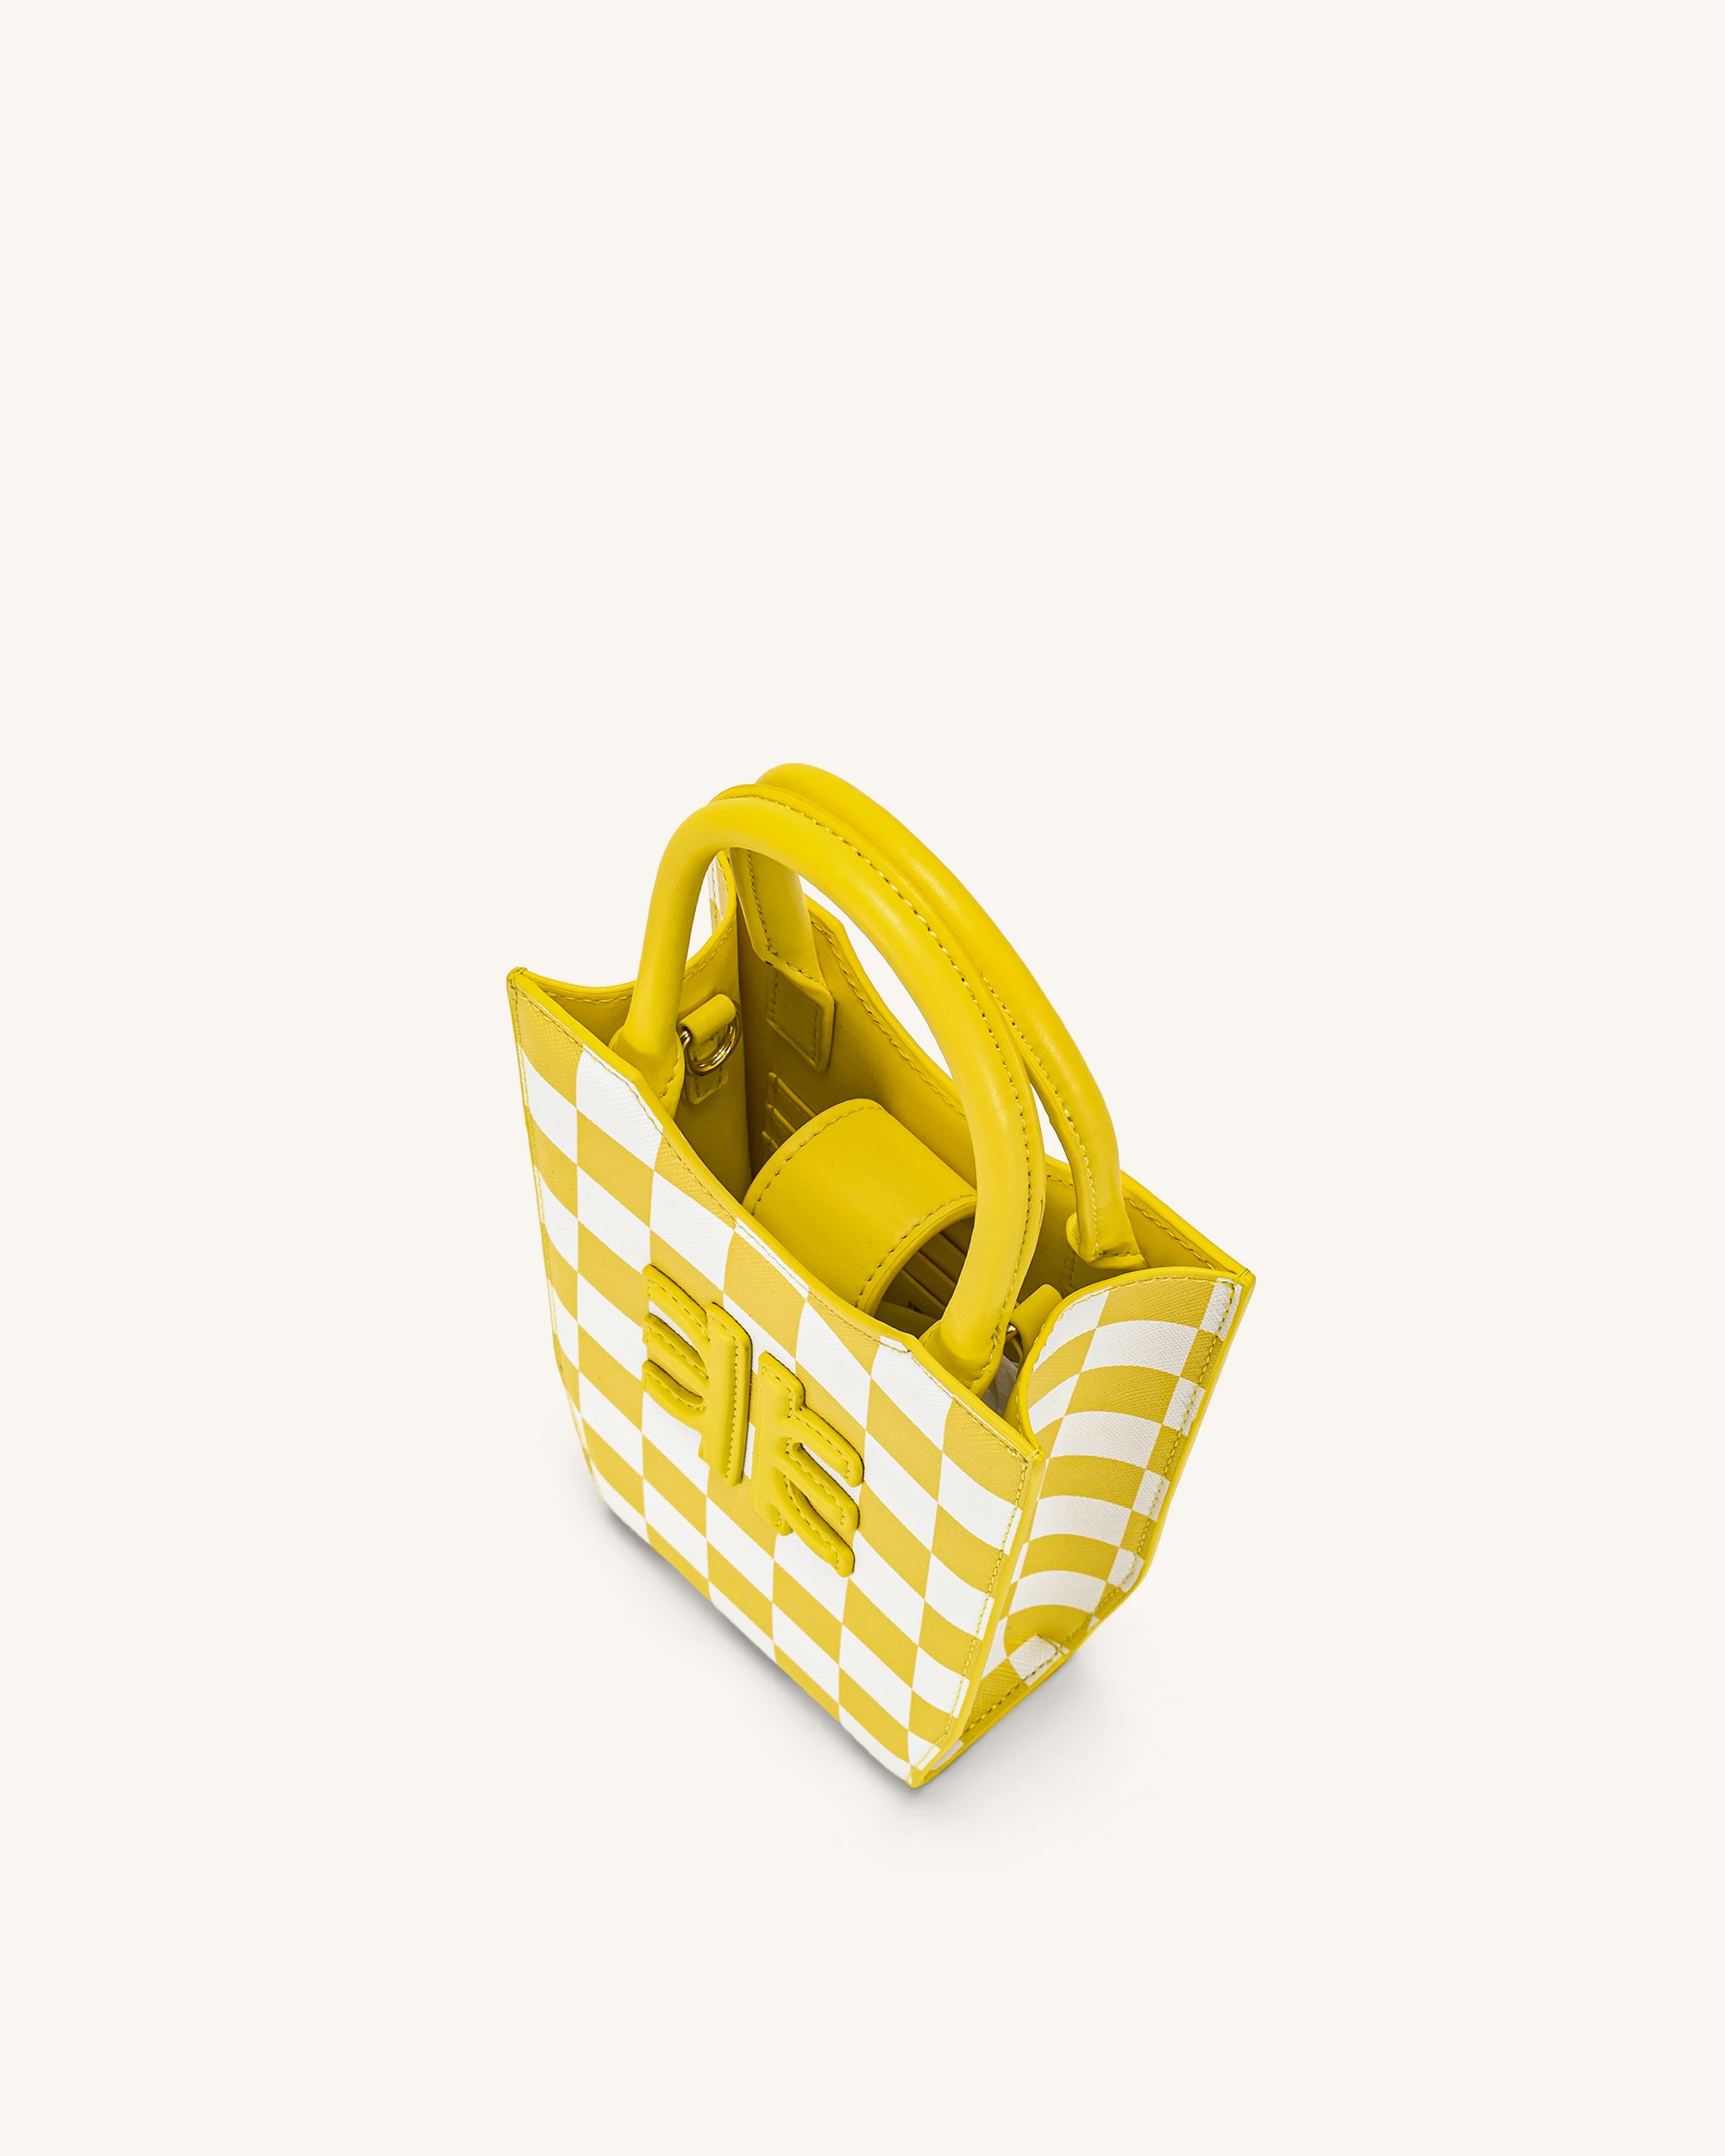 FEI Checkerboard Phone Bag - Yellow & White - JW PEI